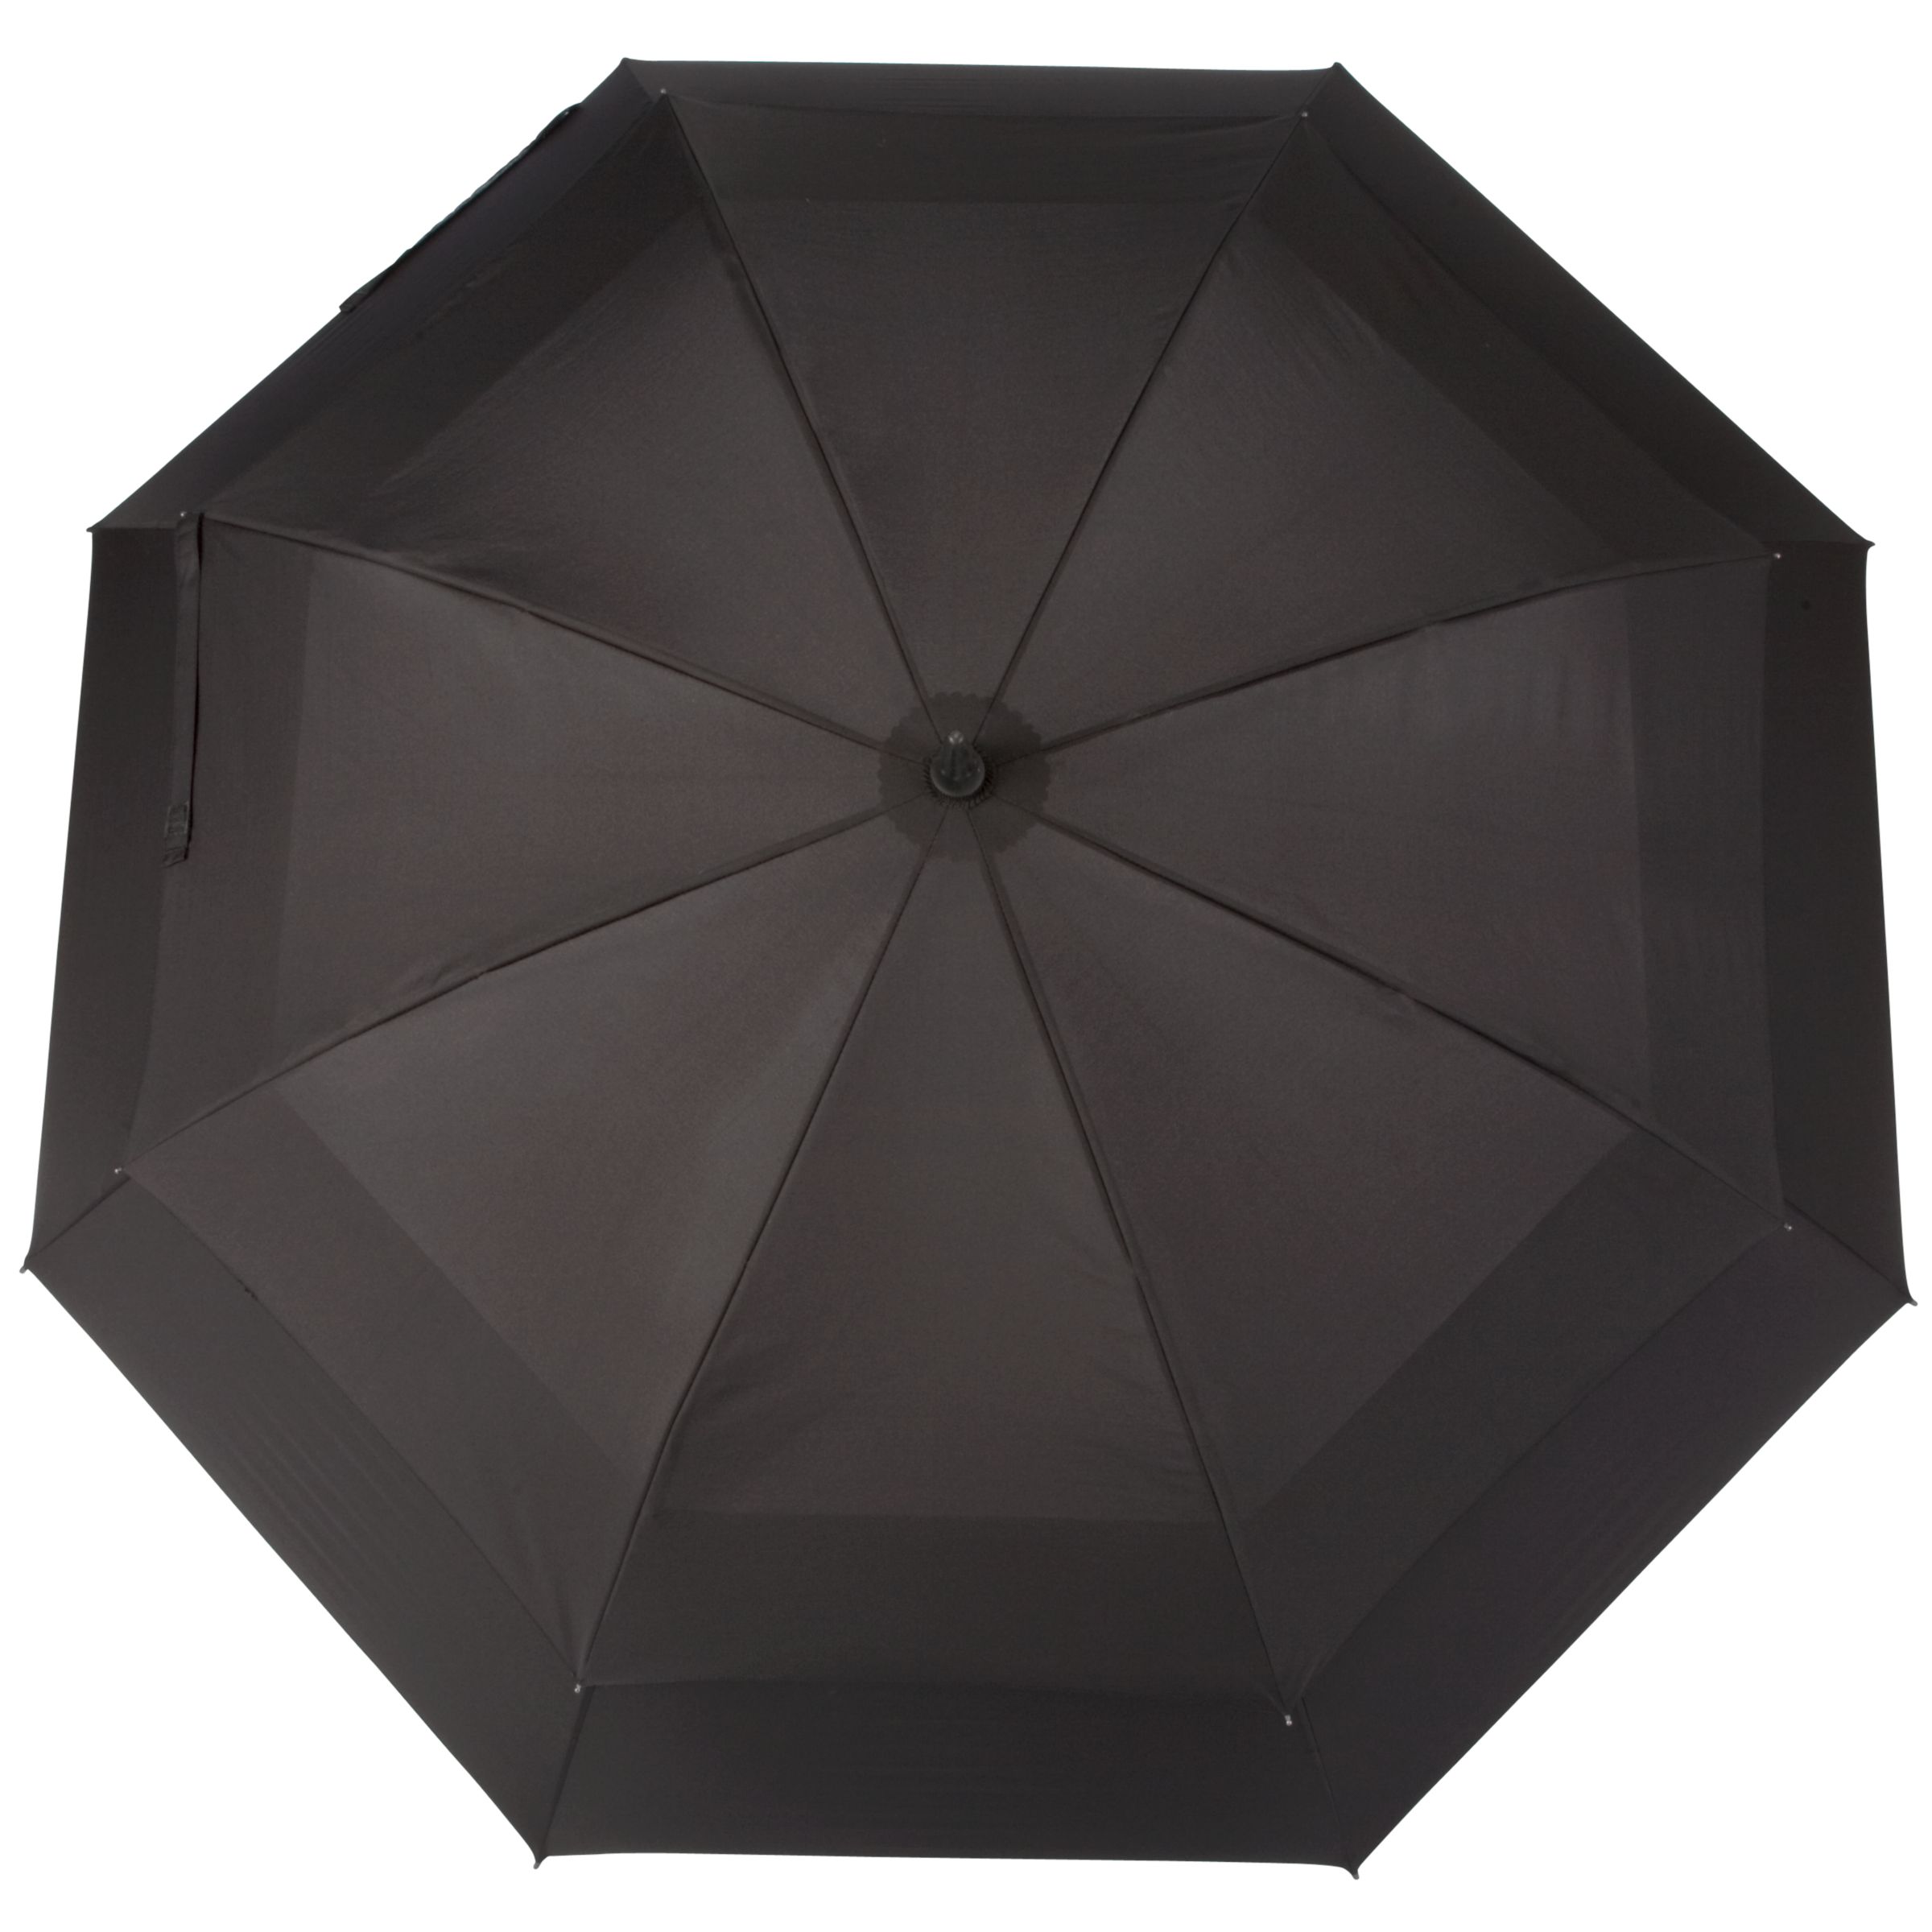 Fulton S669 Stormshield Double Canopy Walker Umbrella, Black